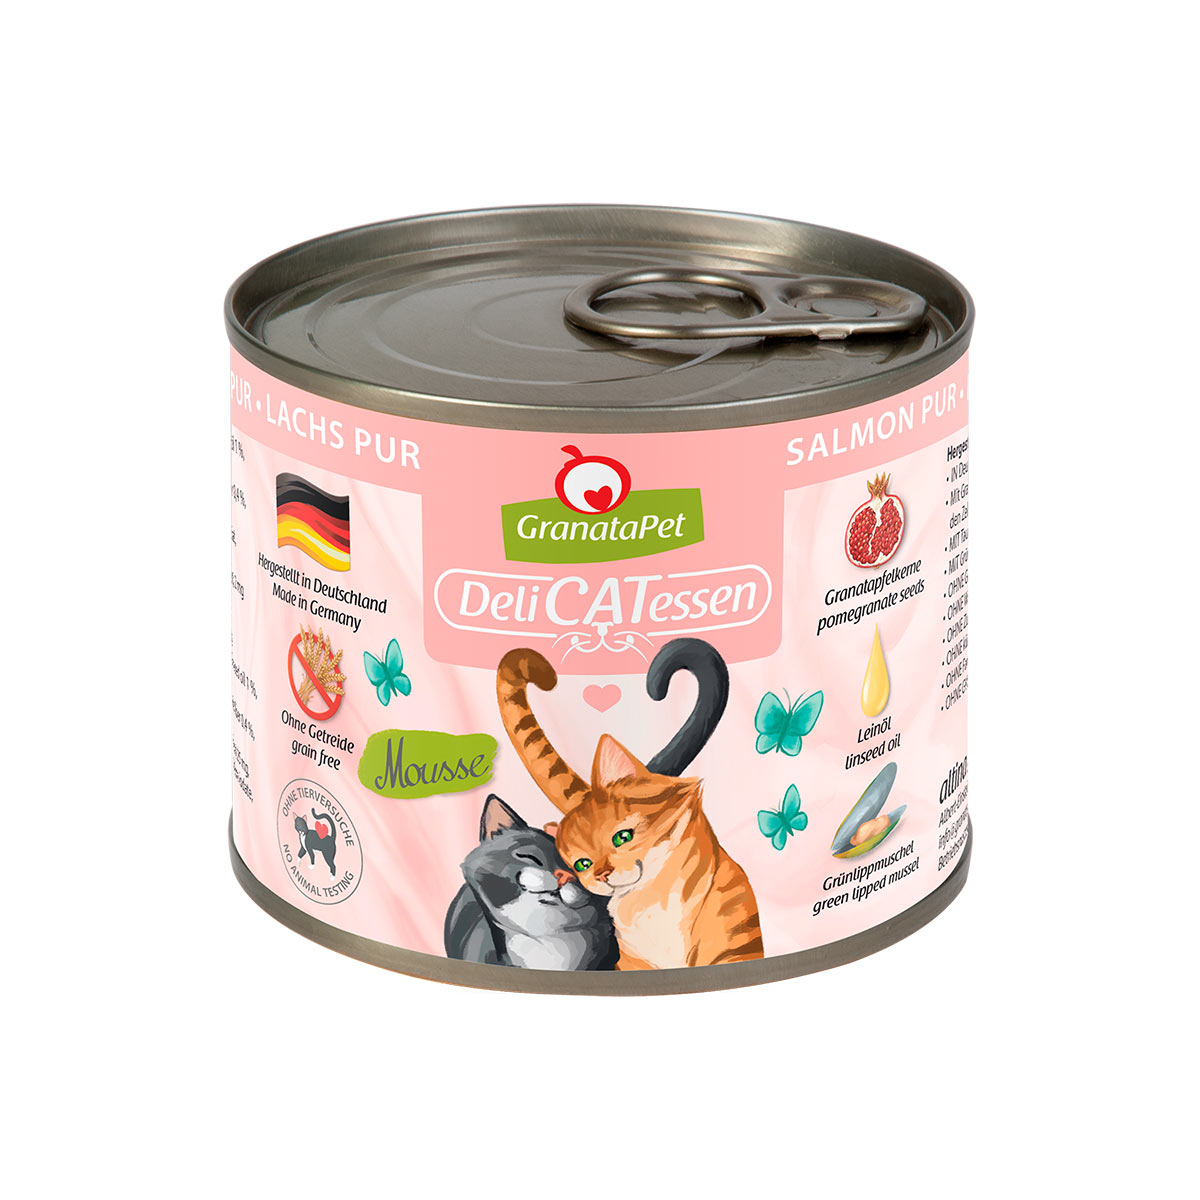 GranataPet Katze – Delicatessen Dose Lachs PUR 6x185g